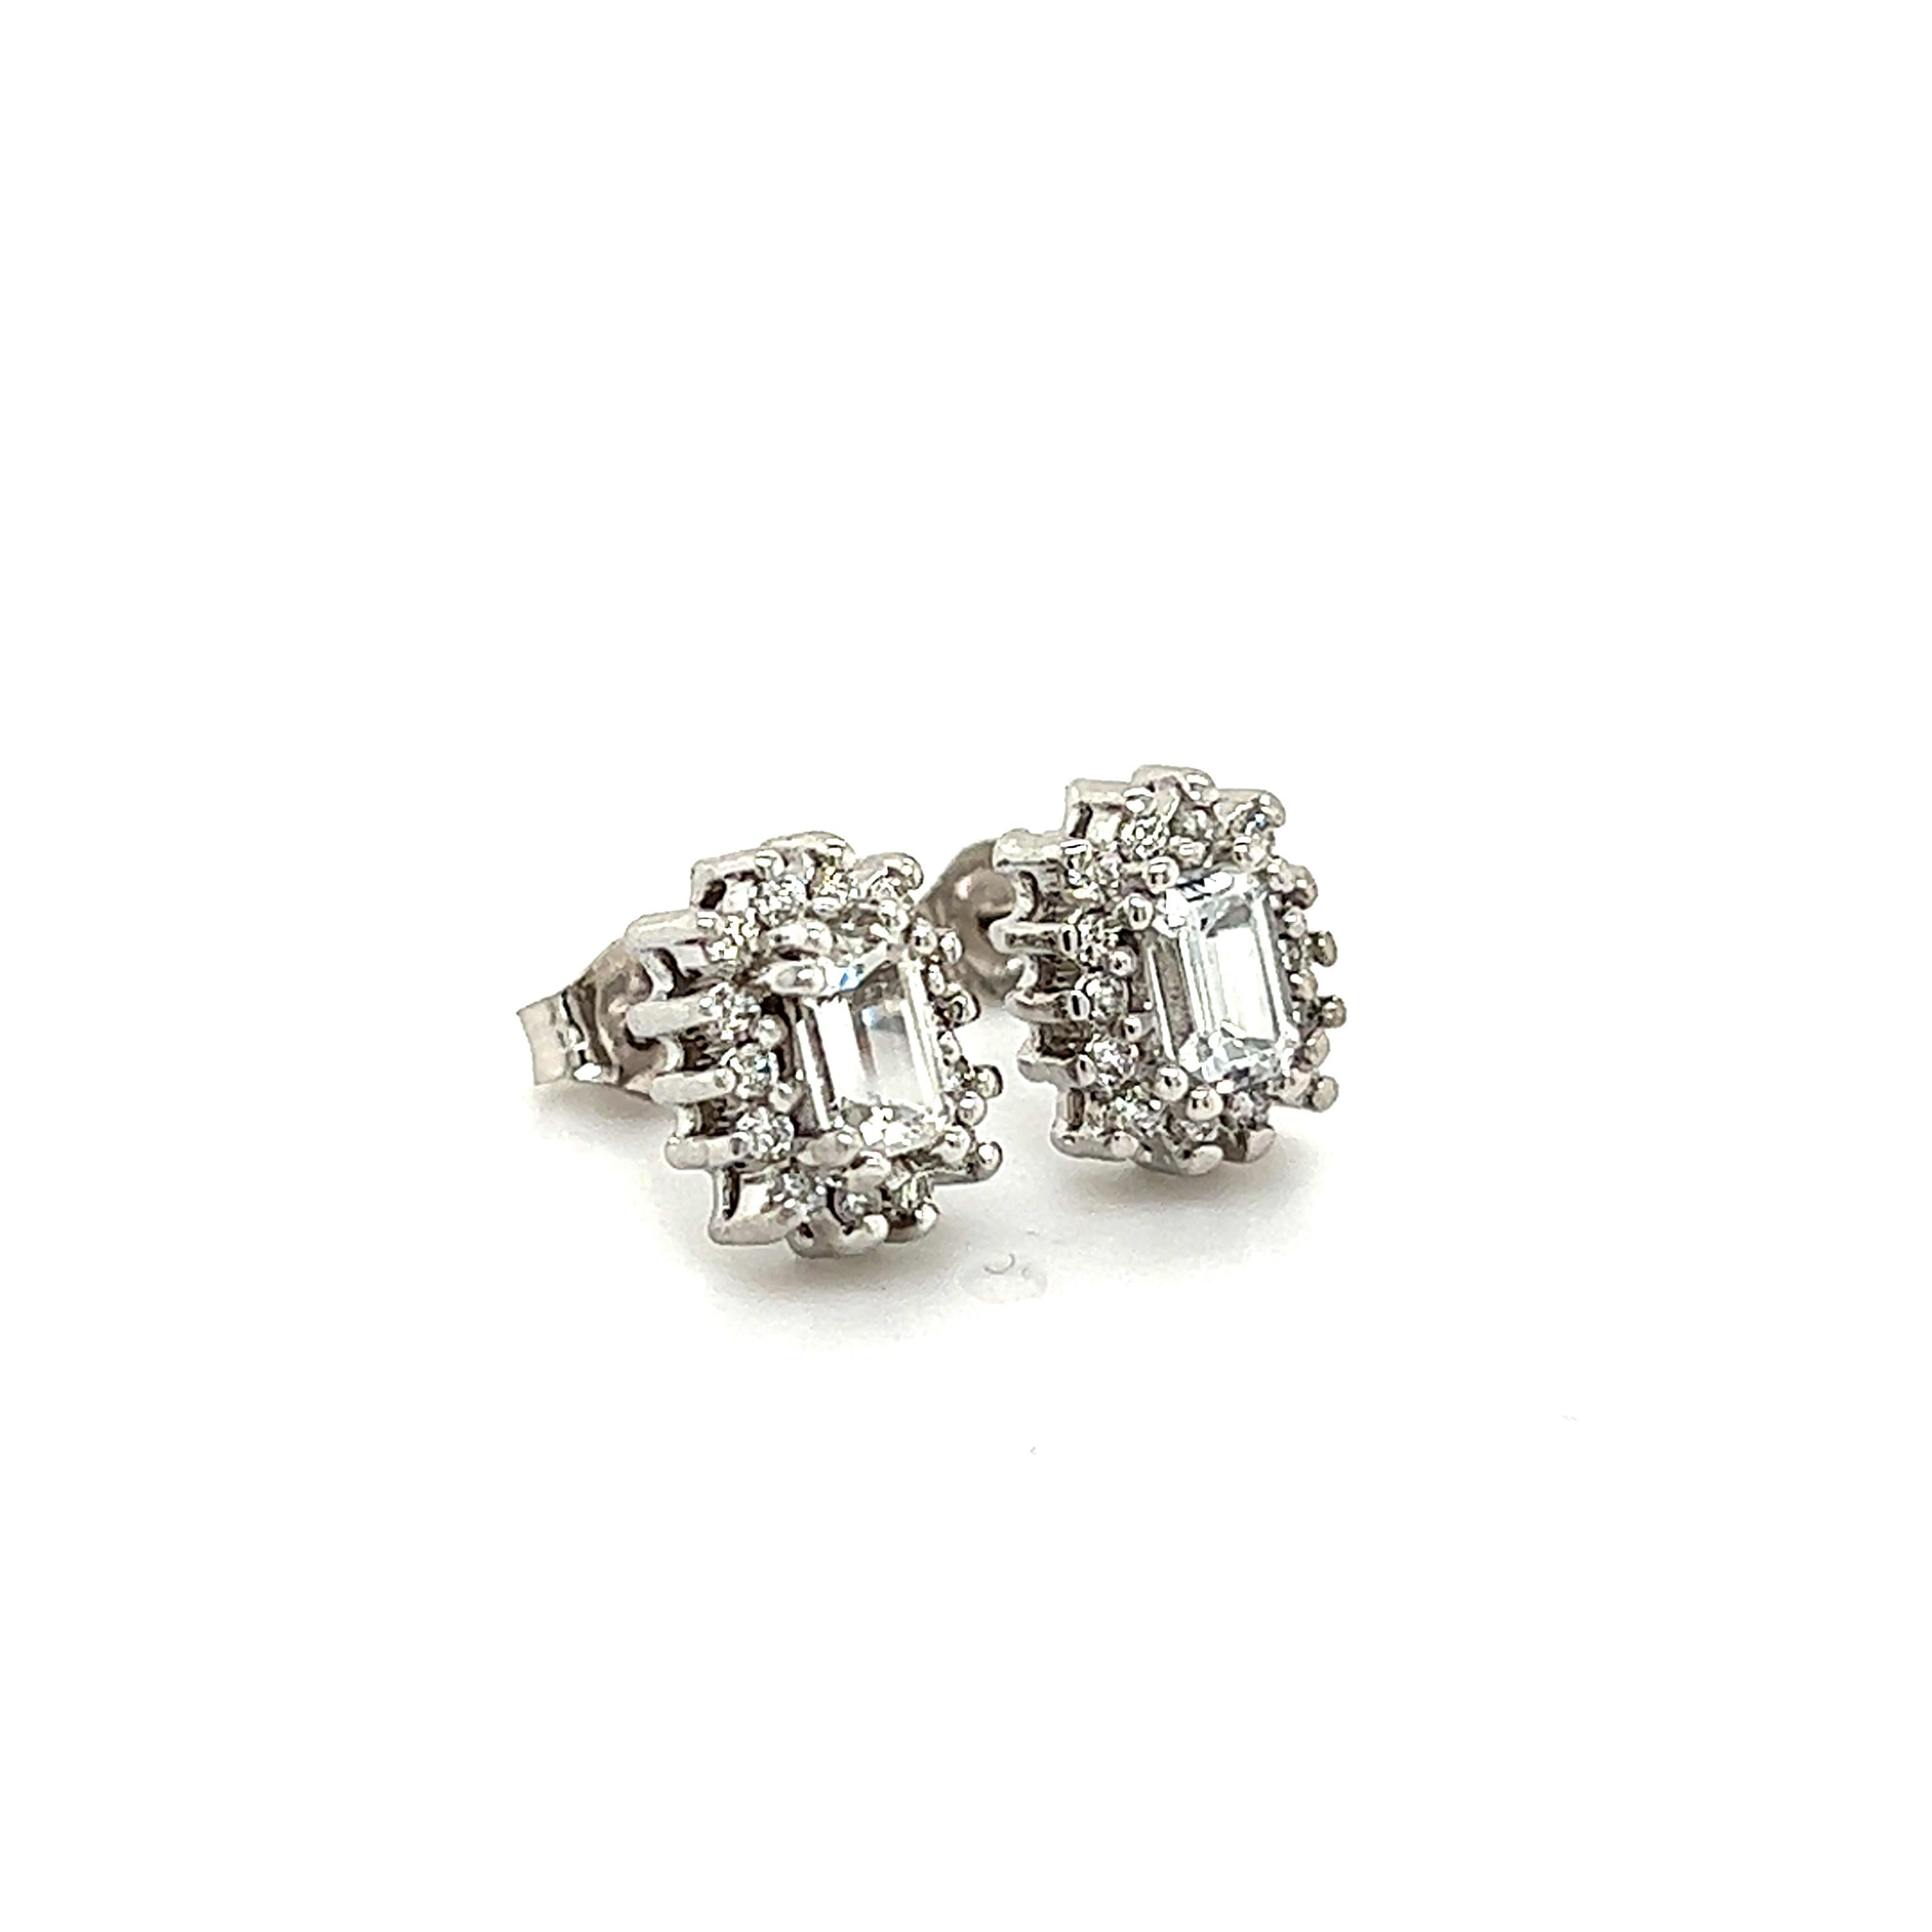 Natural Sapphire Diamond Stud Earrings 14k W Gold 0.94 TCW Certified For Sale 3